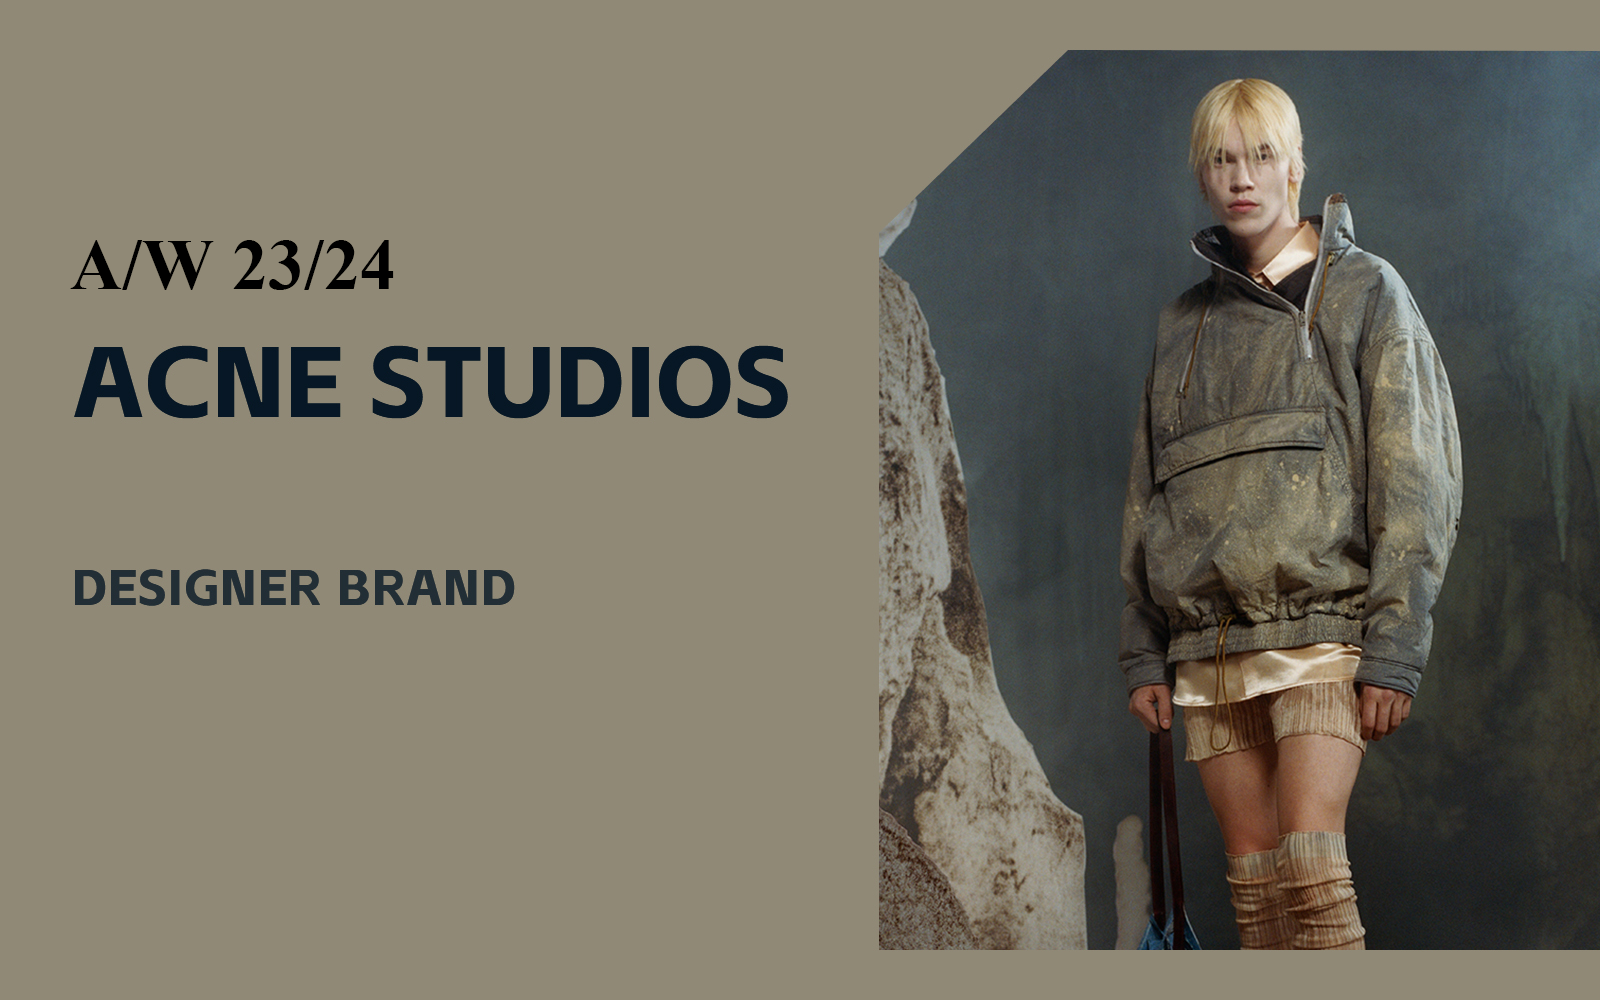 Wasteland Street Fashion -- The Analysis of Acne Studios The Menswear Designer Brand